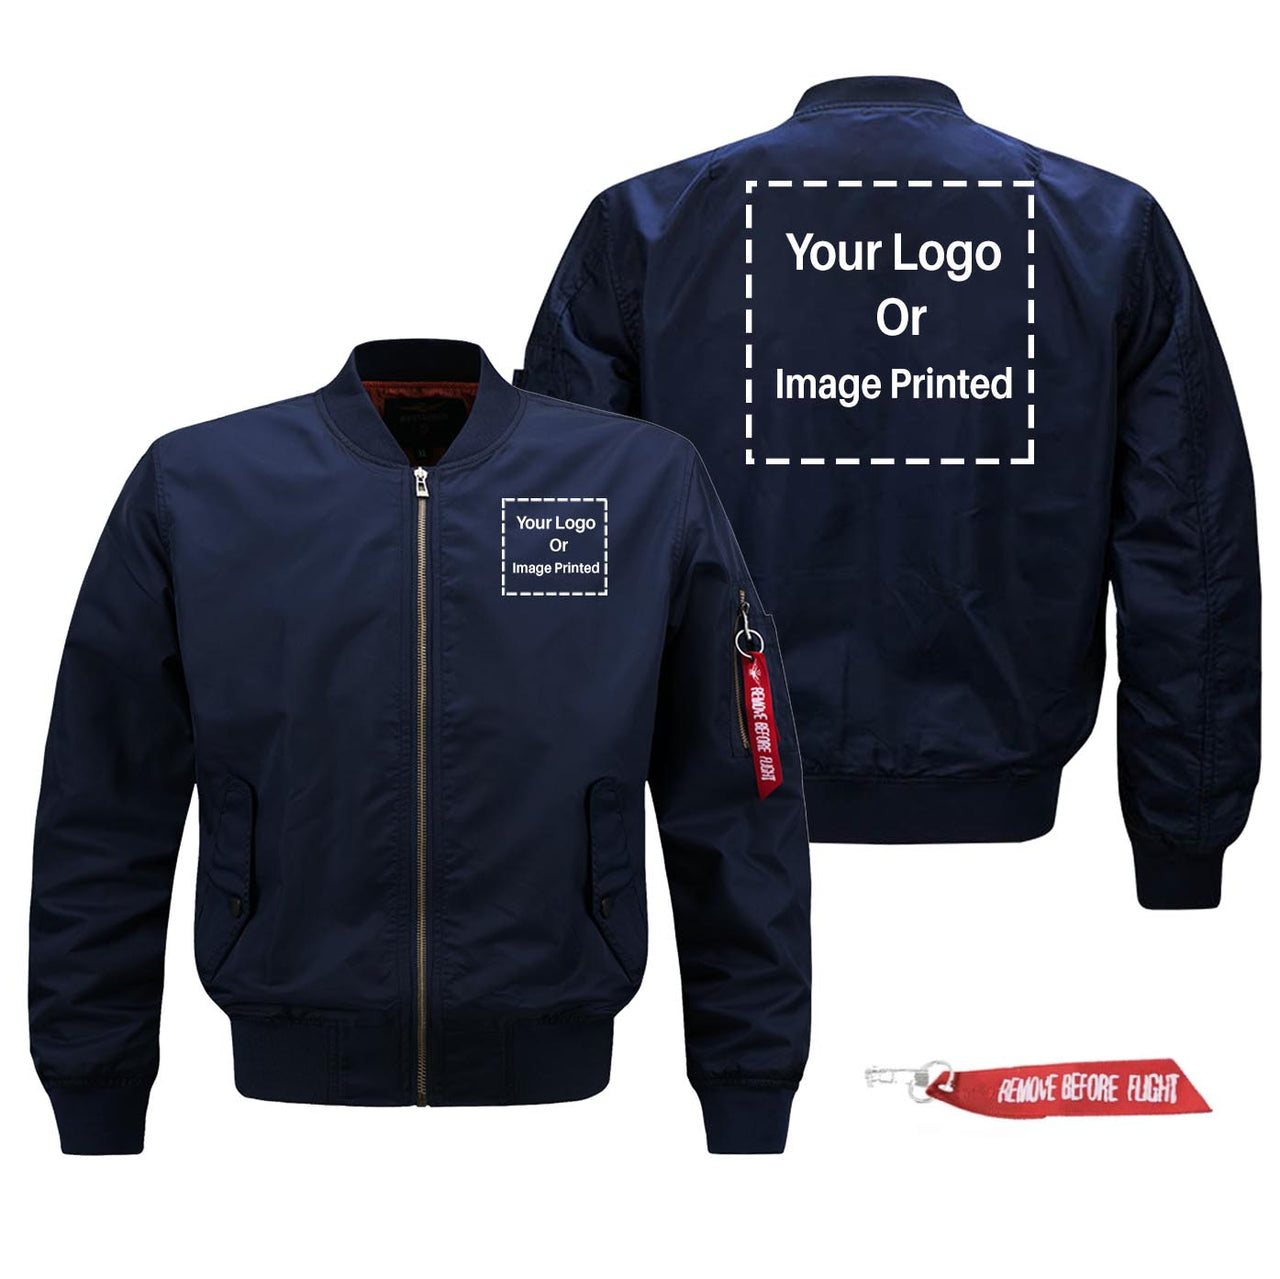 Double Side Your Custom Logos Designed Pilot Jackets